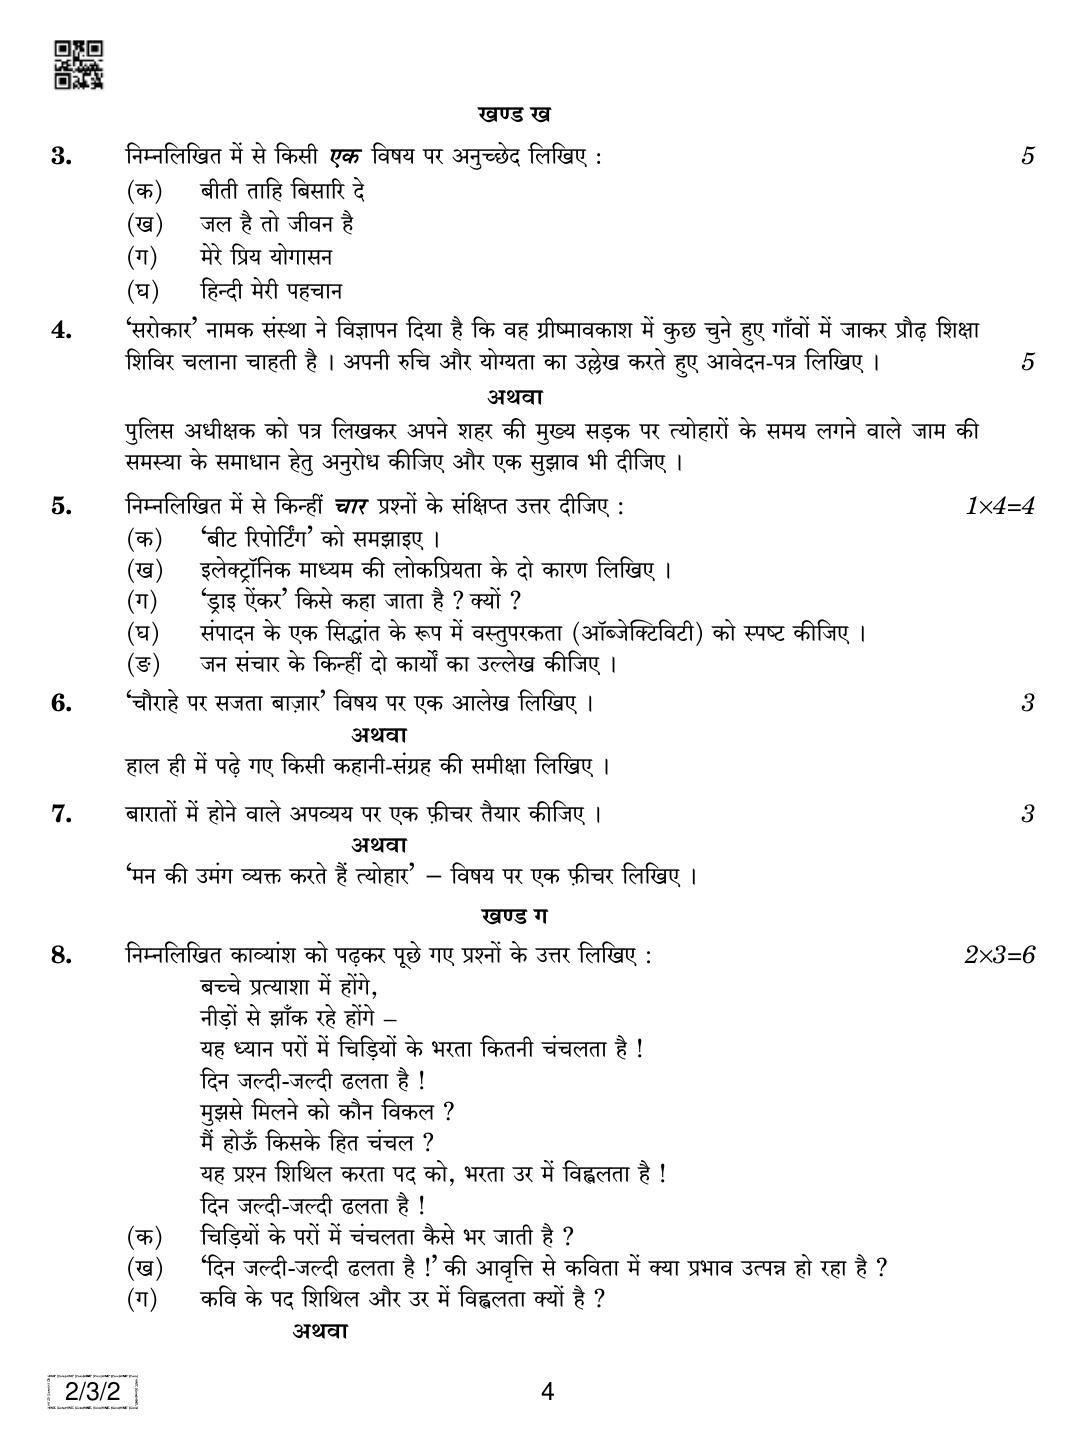 CBSE Class 12 2-3-2 Hindi Core 2019 Question Paper - Page 4